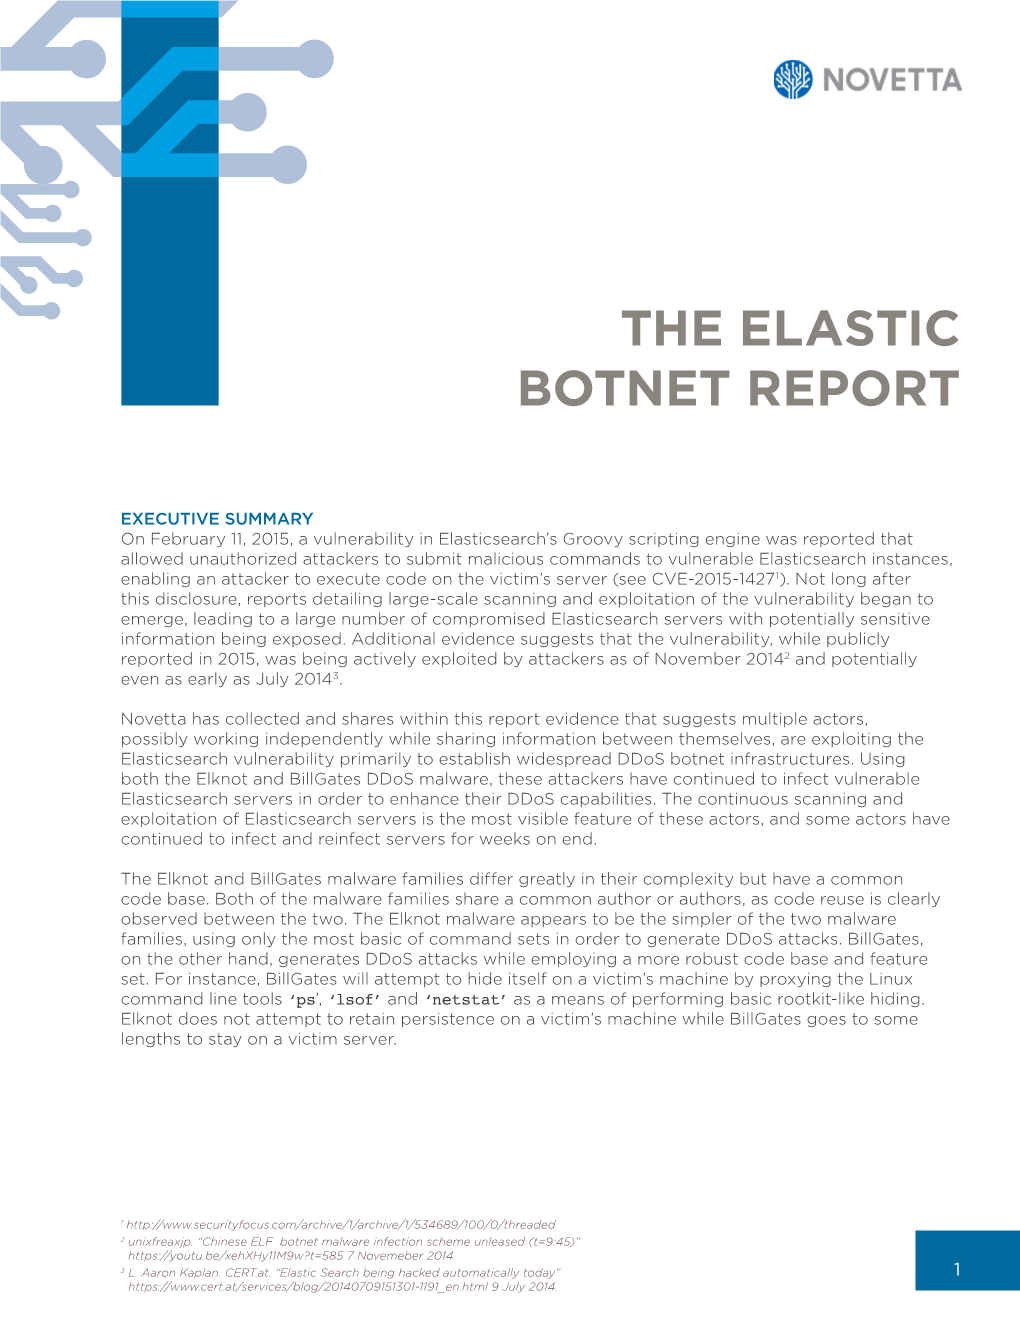 The Elastic Botnet Report